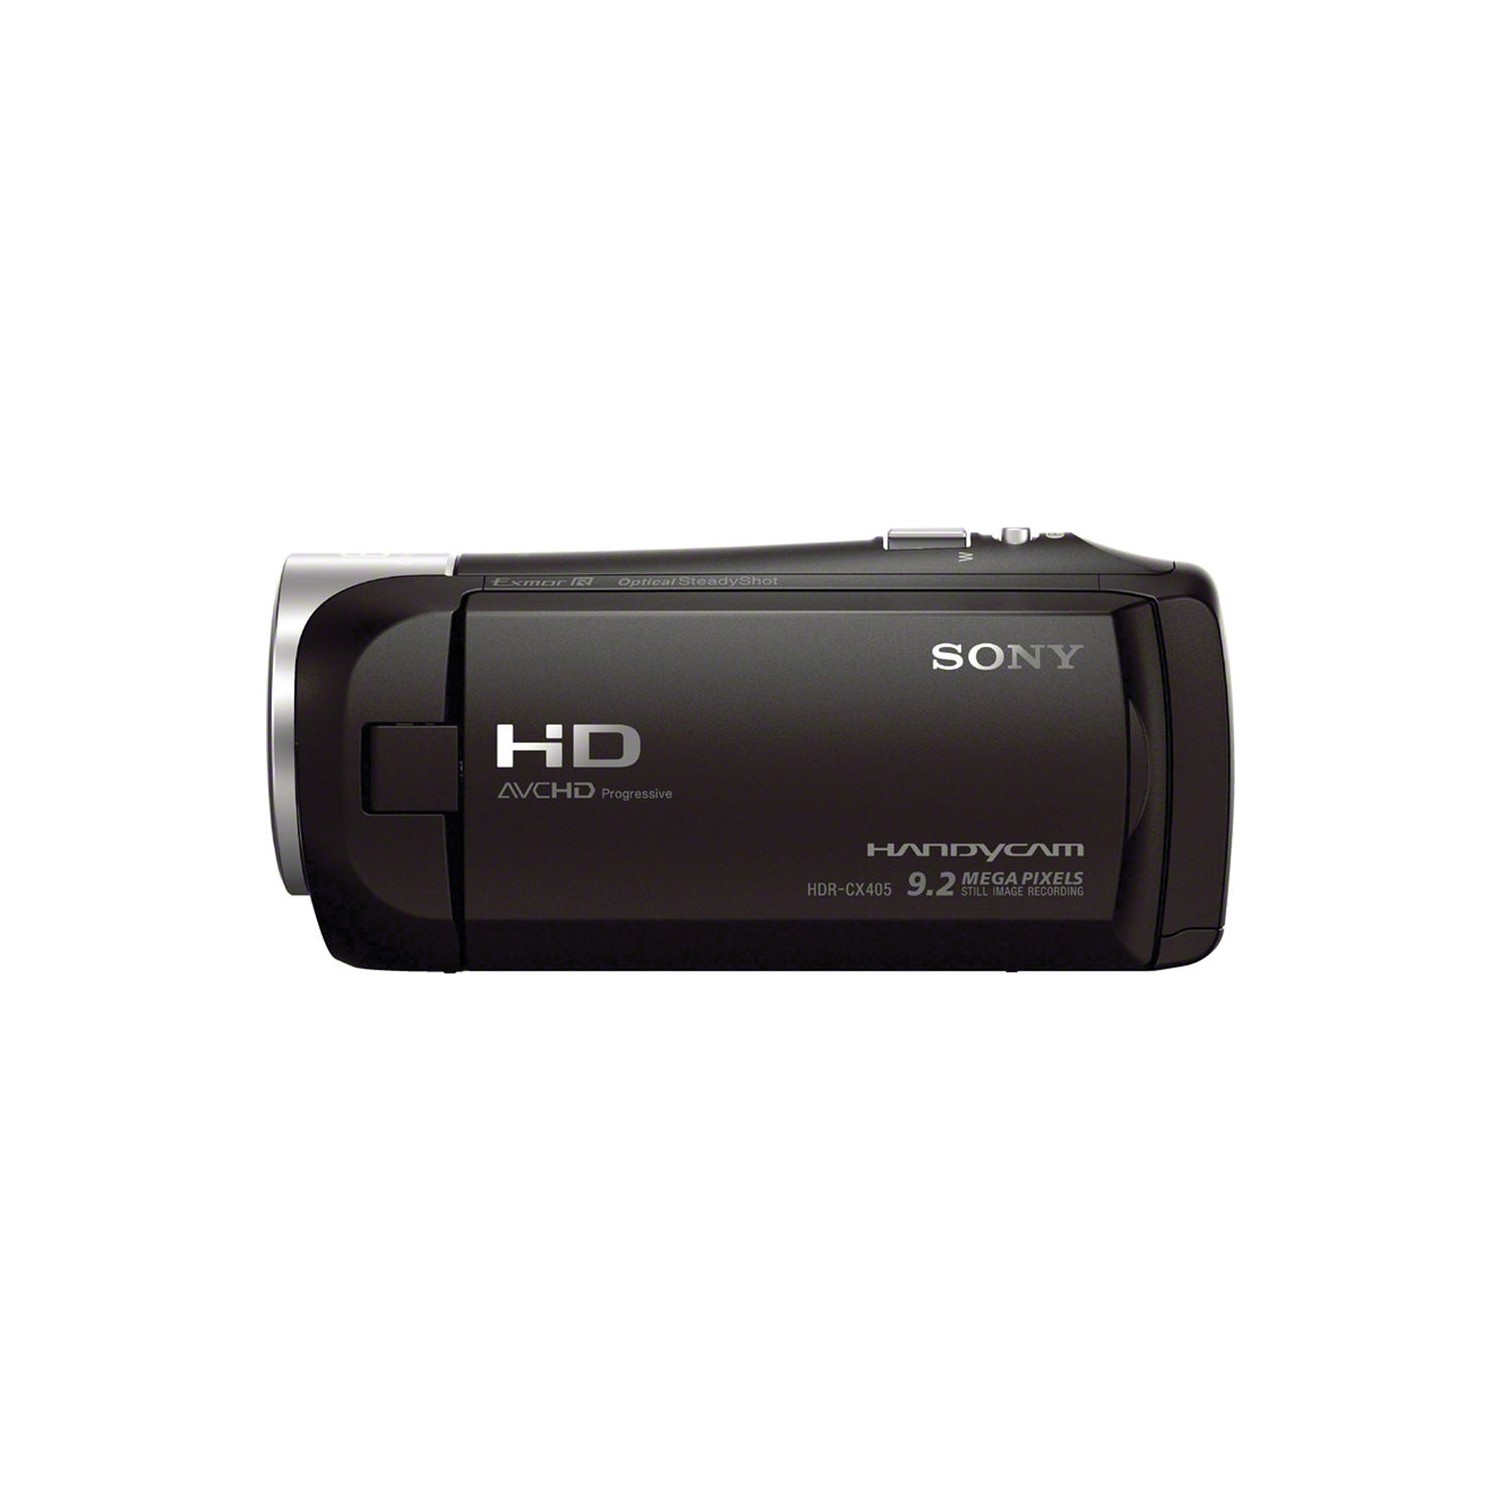 Sony hdr телевизор. Sony HDR-cx405e. Sony Handycam HDR-cx405. Sony HDR-pj410. Видеокамера Sony HDR-cx405 Handycam.